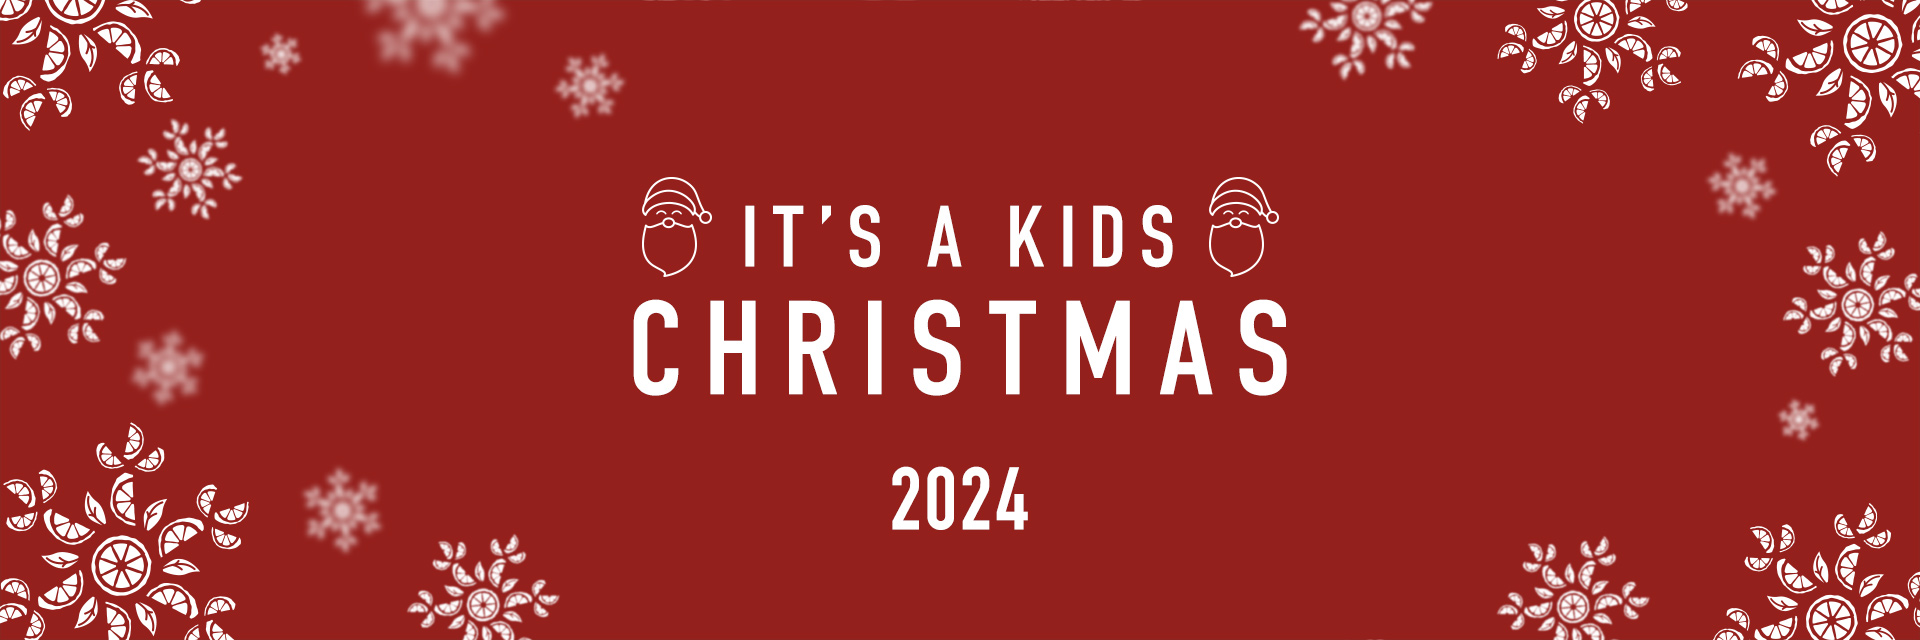 Kids Christmas Menu 2024 at Harvester Croxley Green